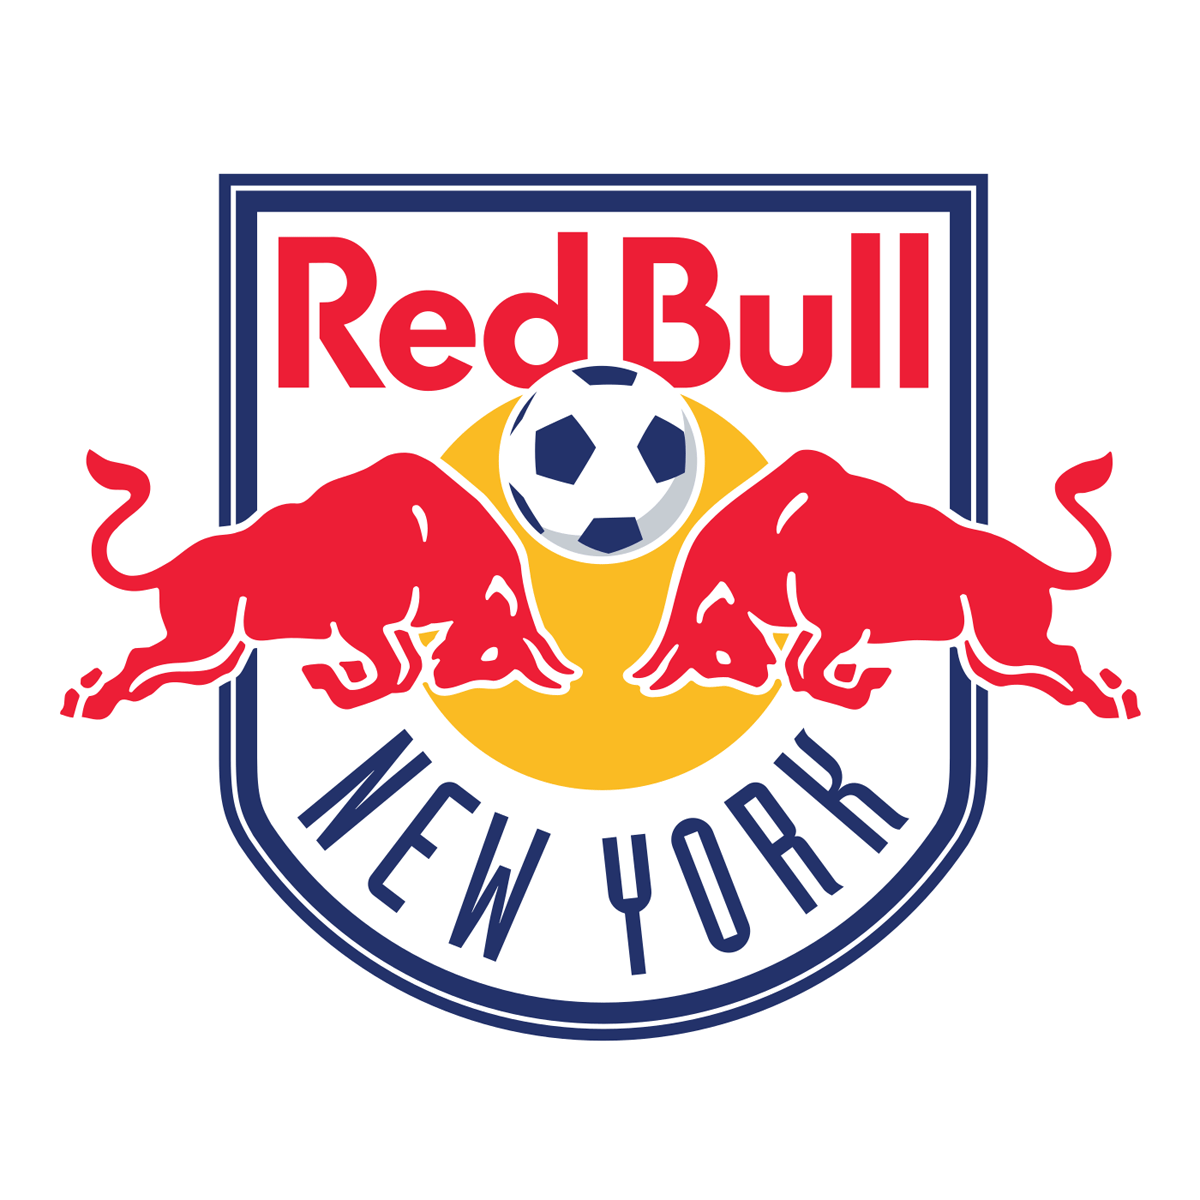 MLS New York Red Bulls logo transparent PNG